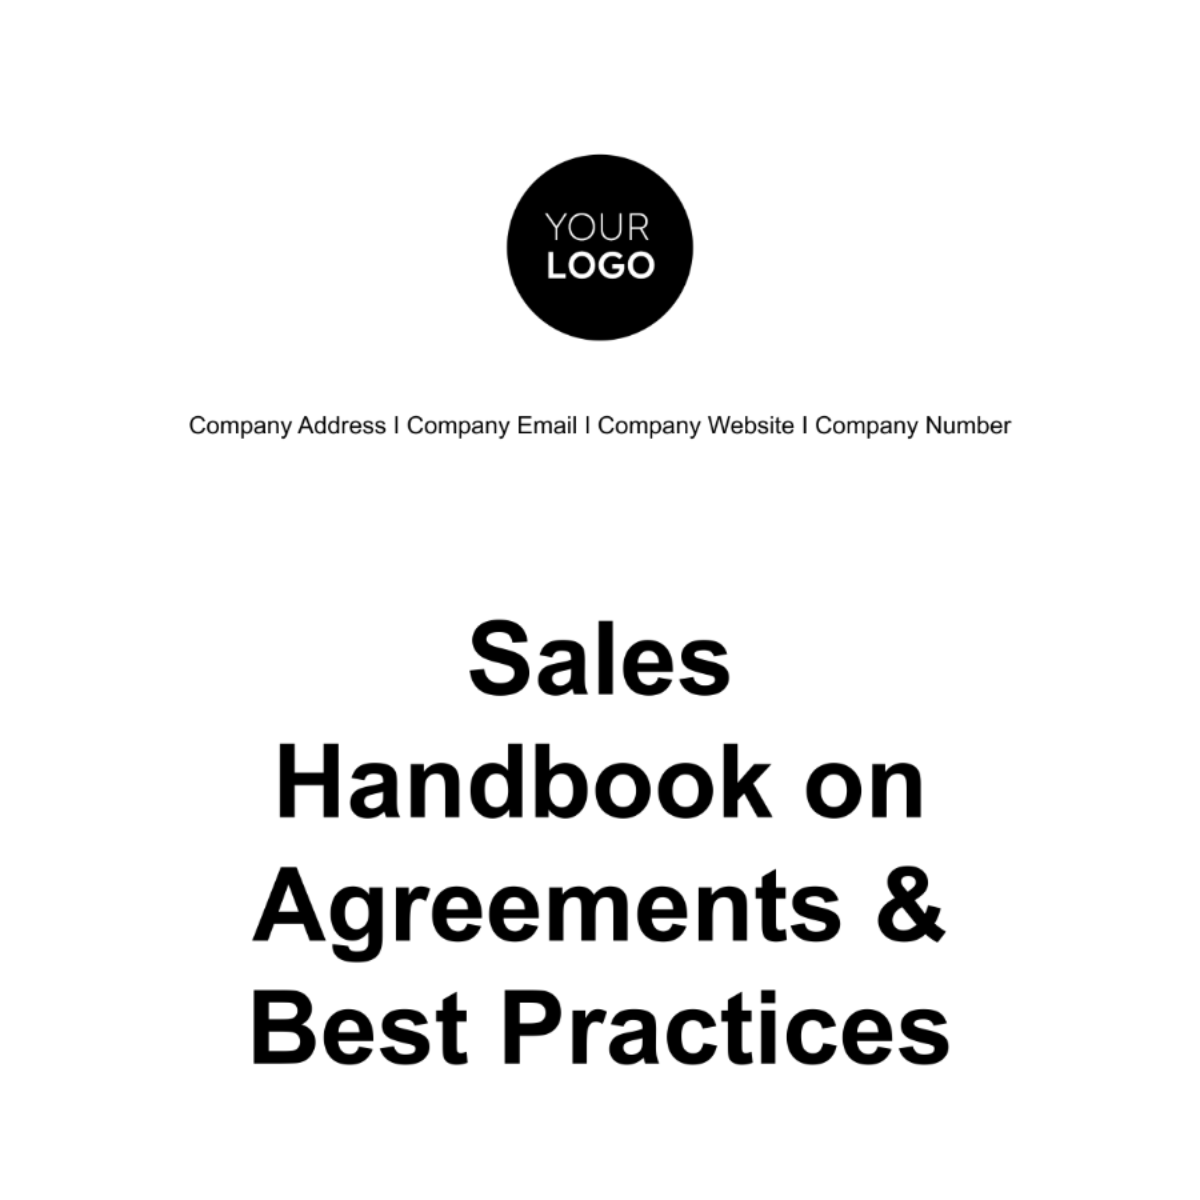 Free Sales Handbook on Agreements & Best Practices Template